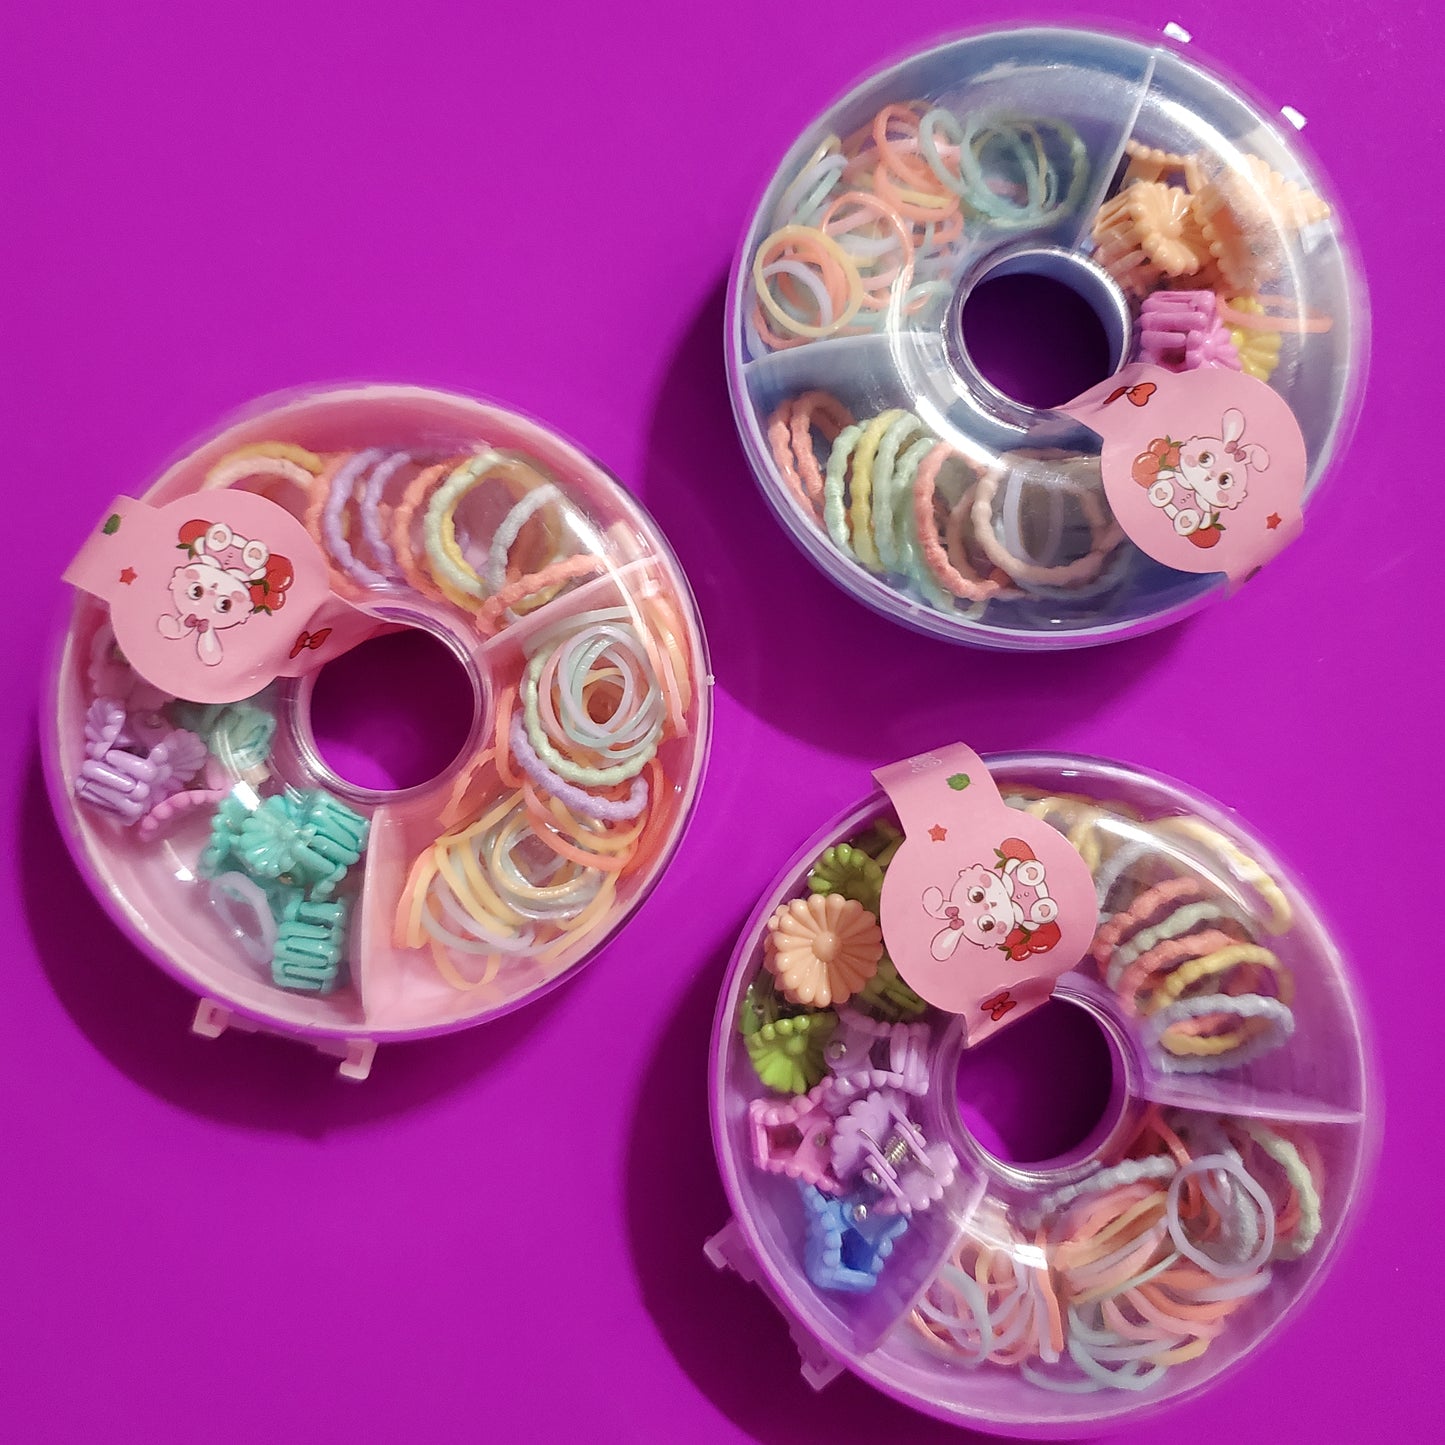 girls hair accessories in cute donut case